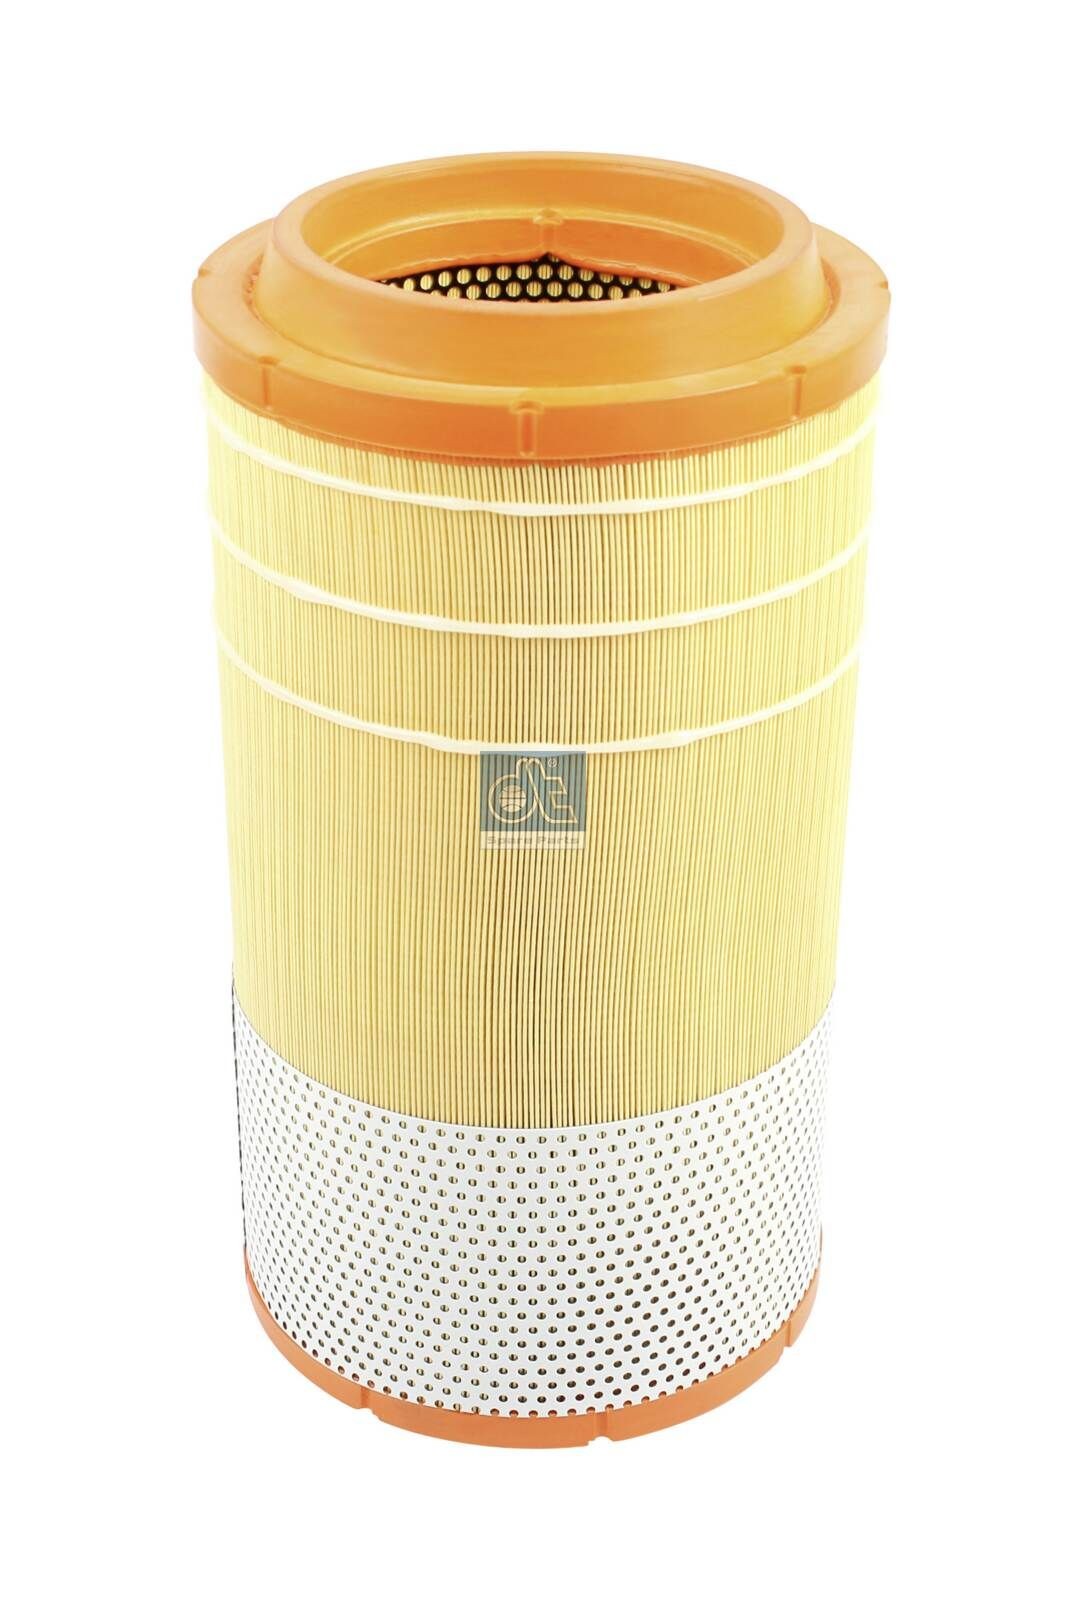 DT Spare Parts 3.18524 Air filter 478mm, 251mm, Filter Insert